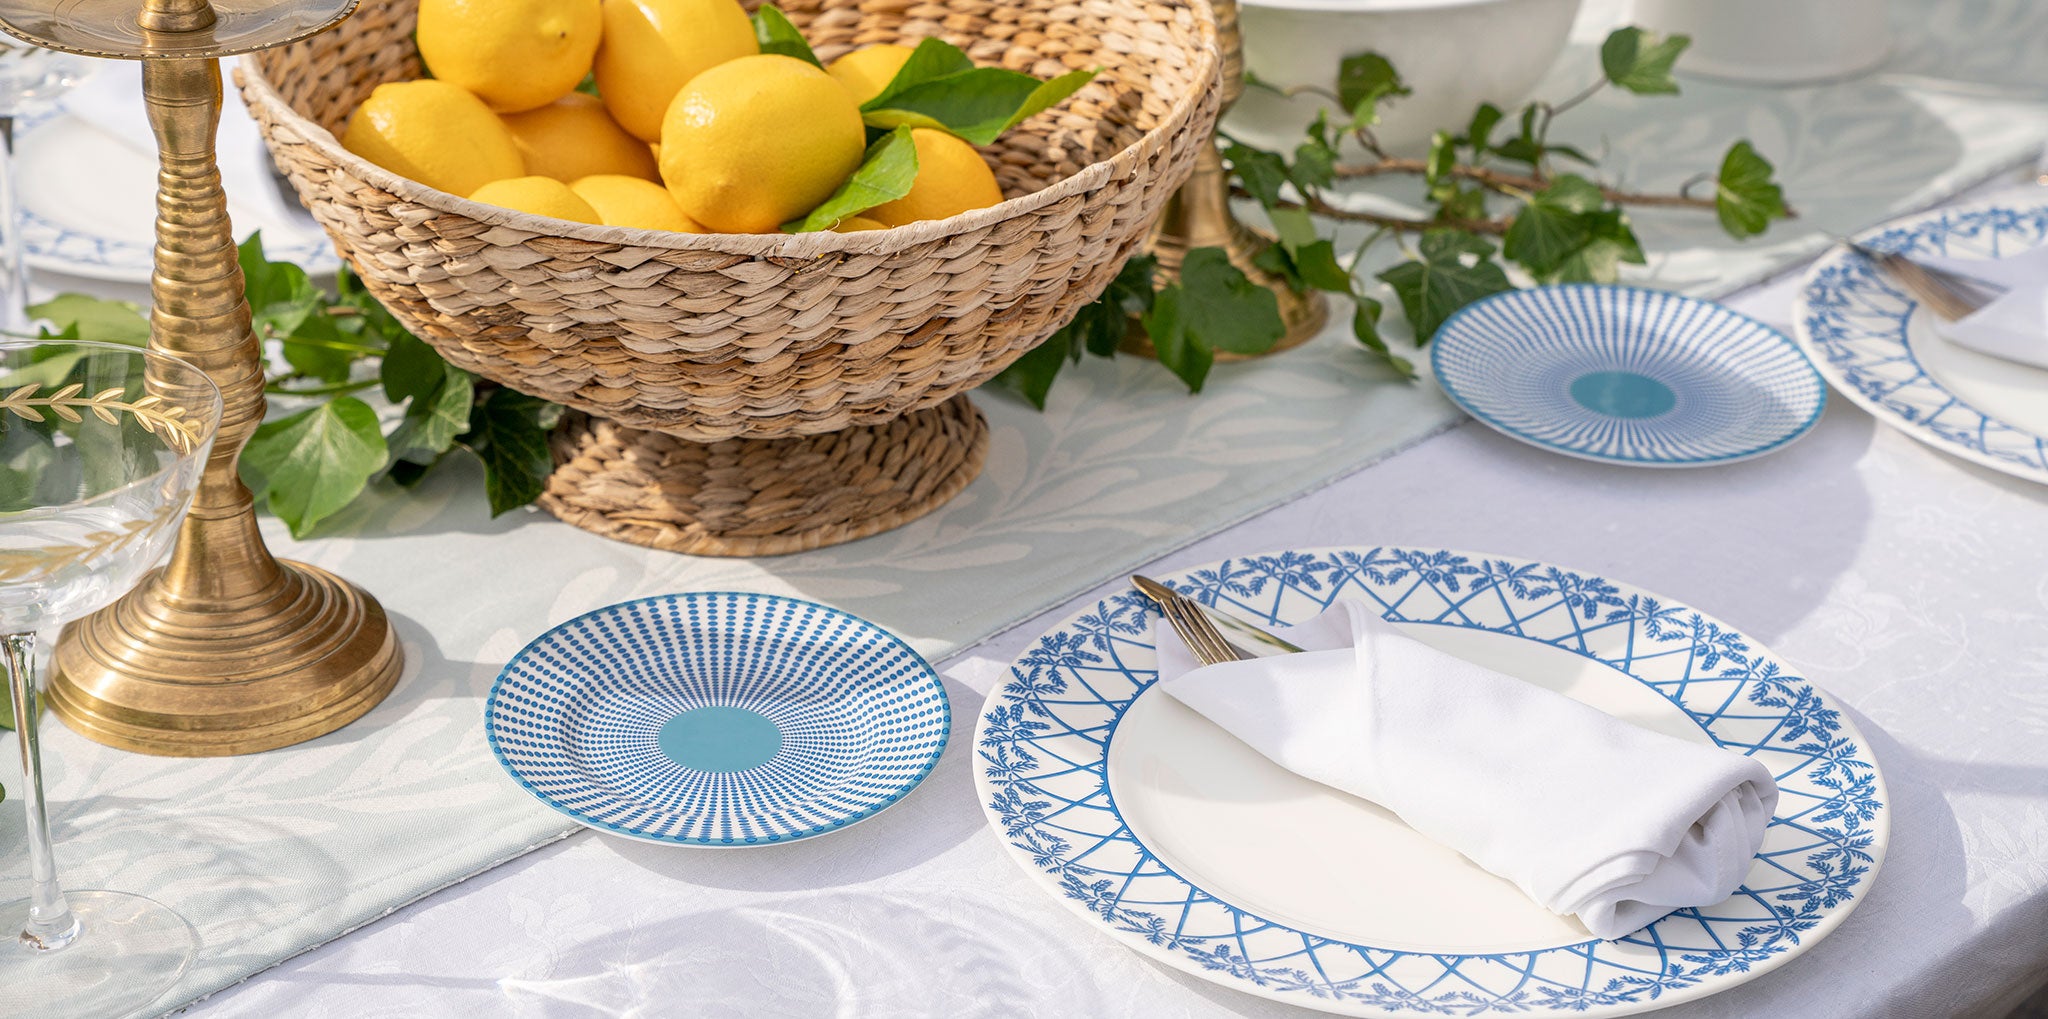 Elegant fine bone porcelain china dinner sets and beautiful printed linen tablecloths